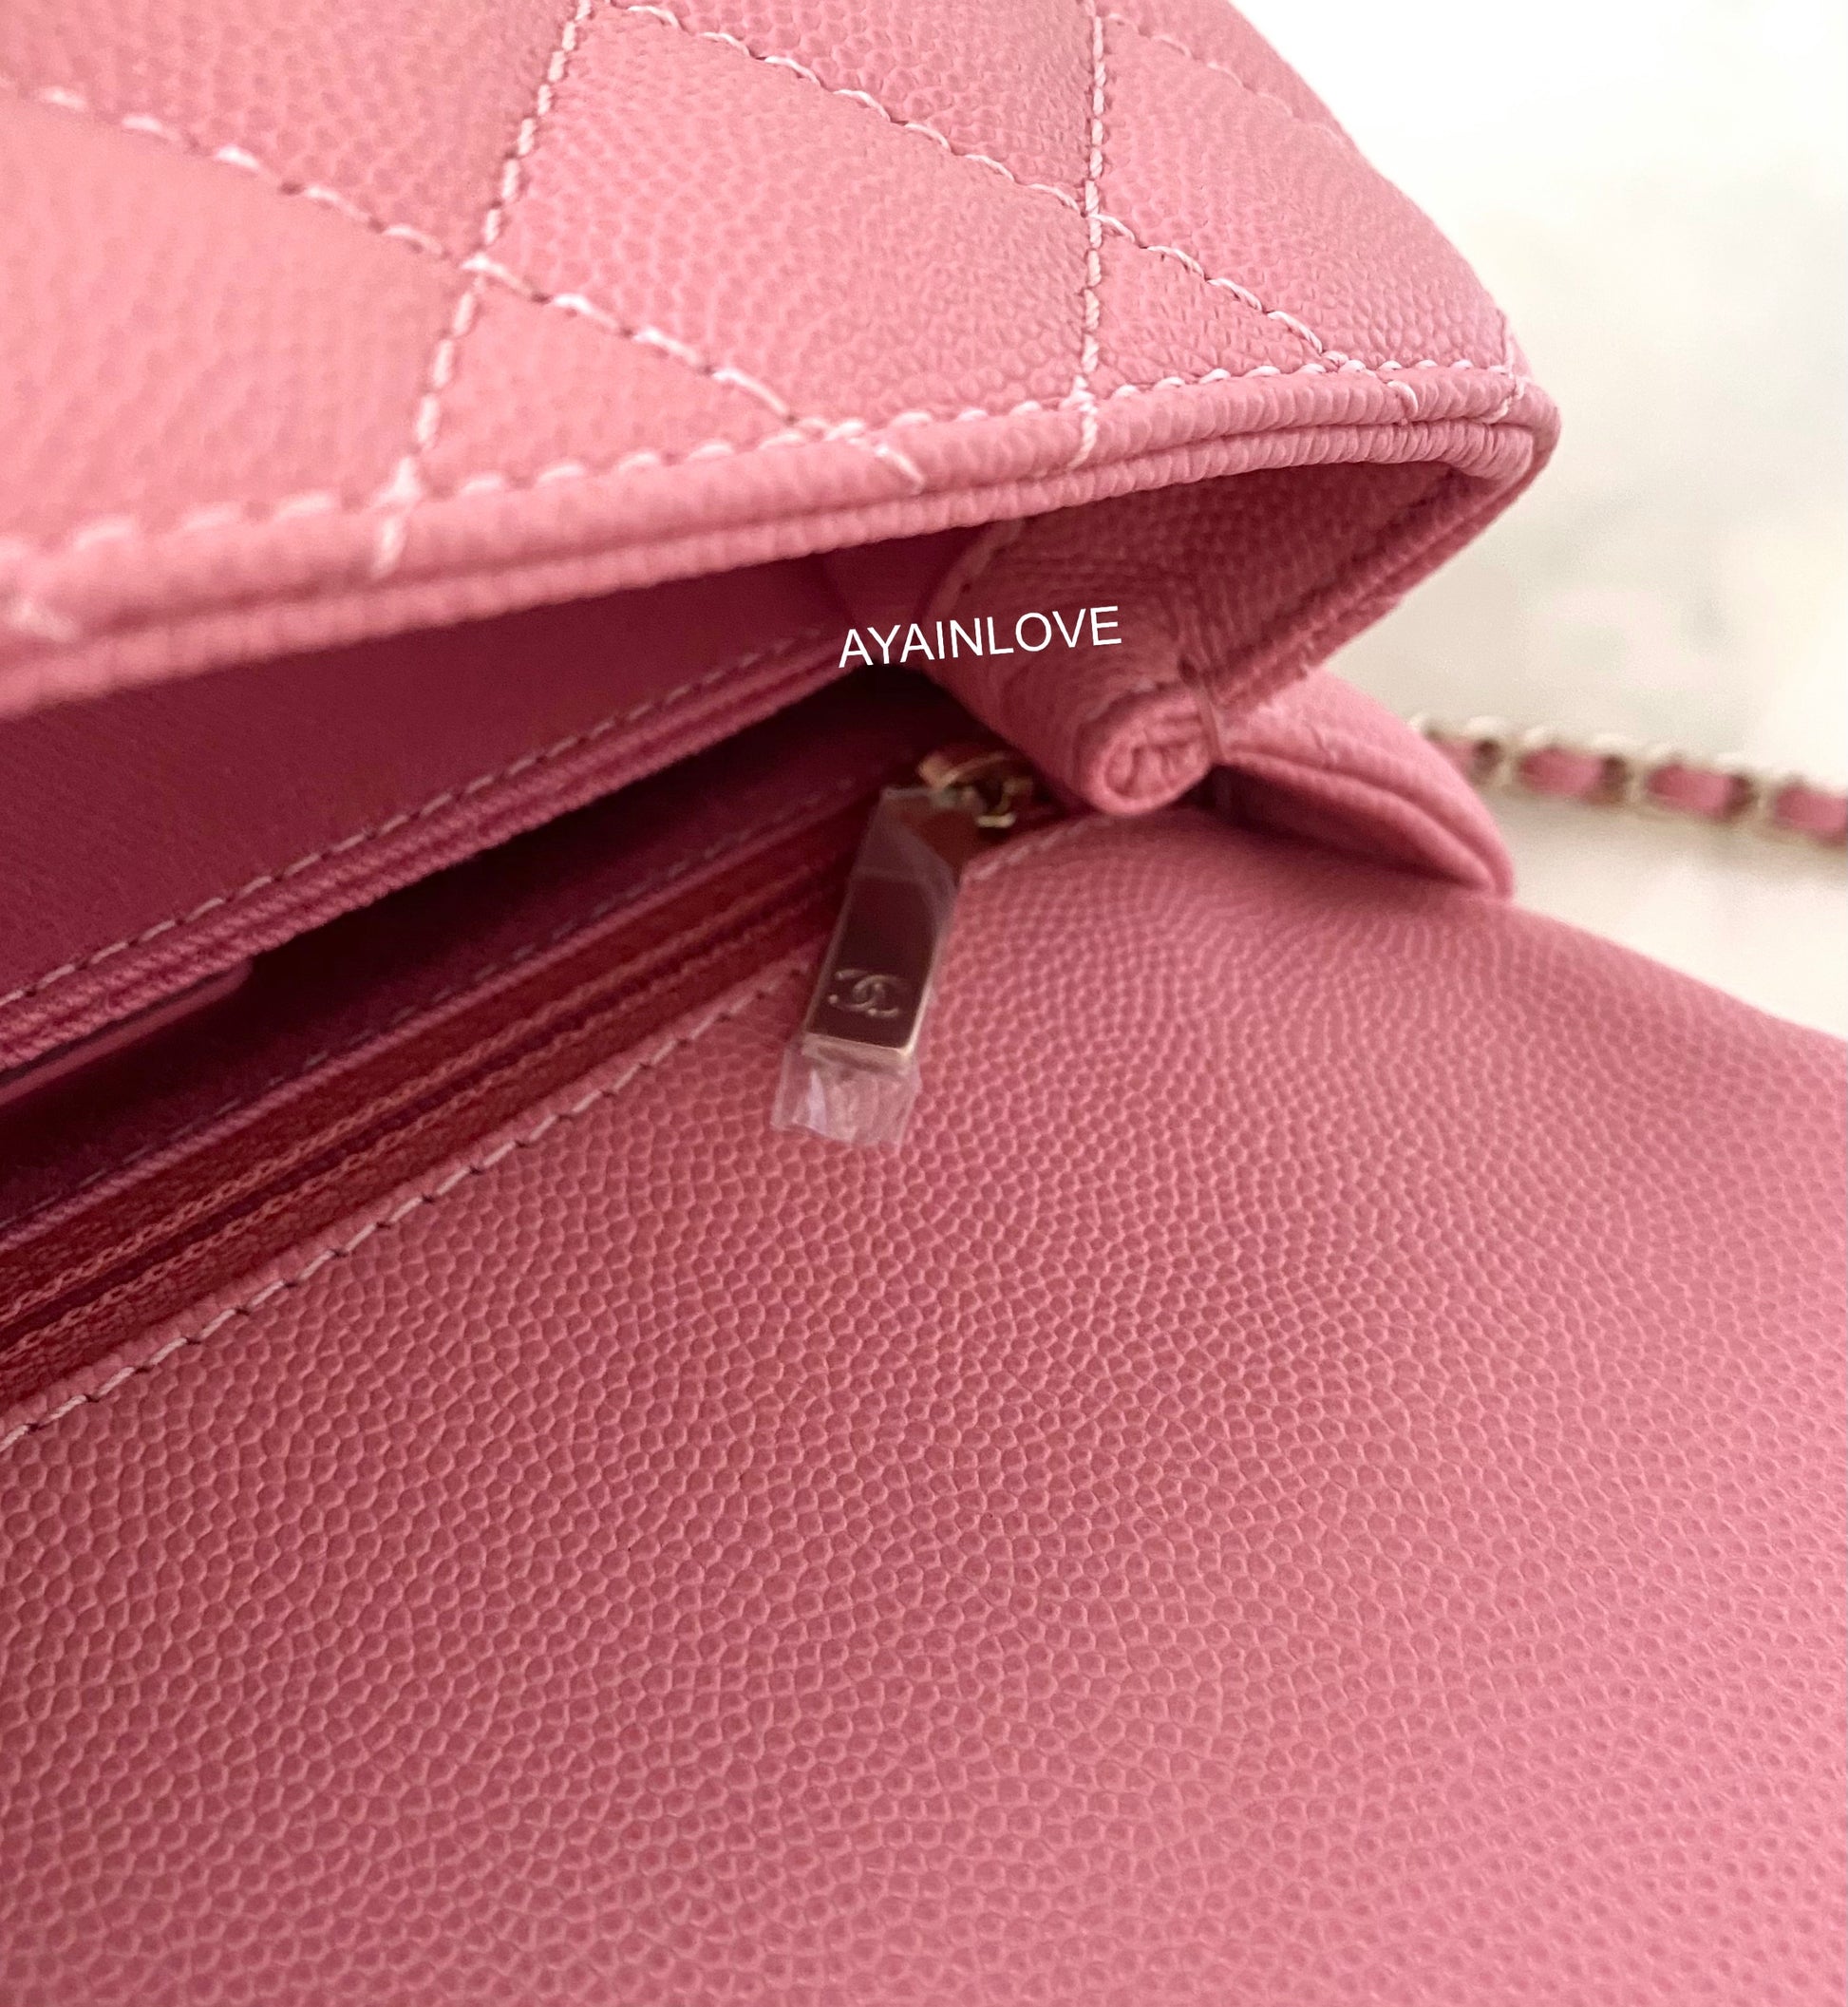 CHANEL, Accessories, Chanel Iridescent Pink Key Holder 2k